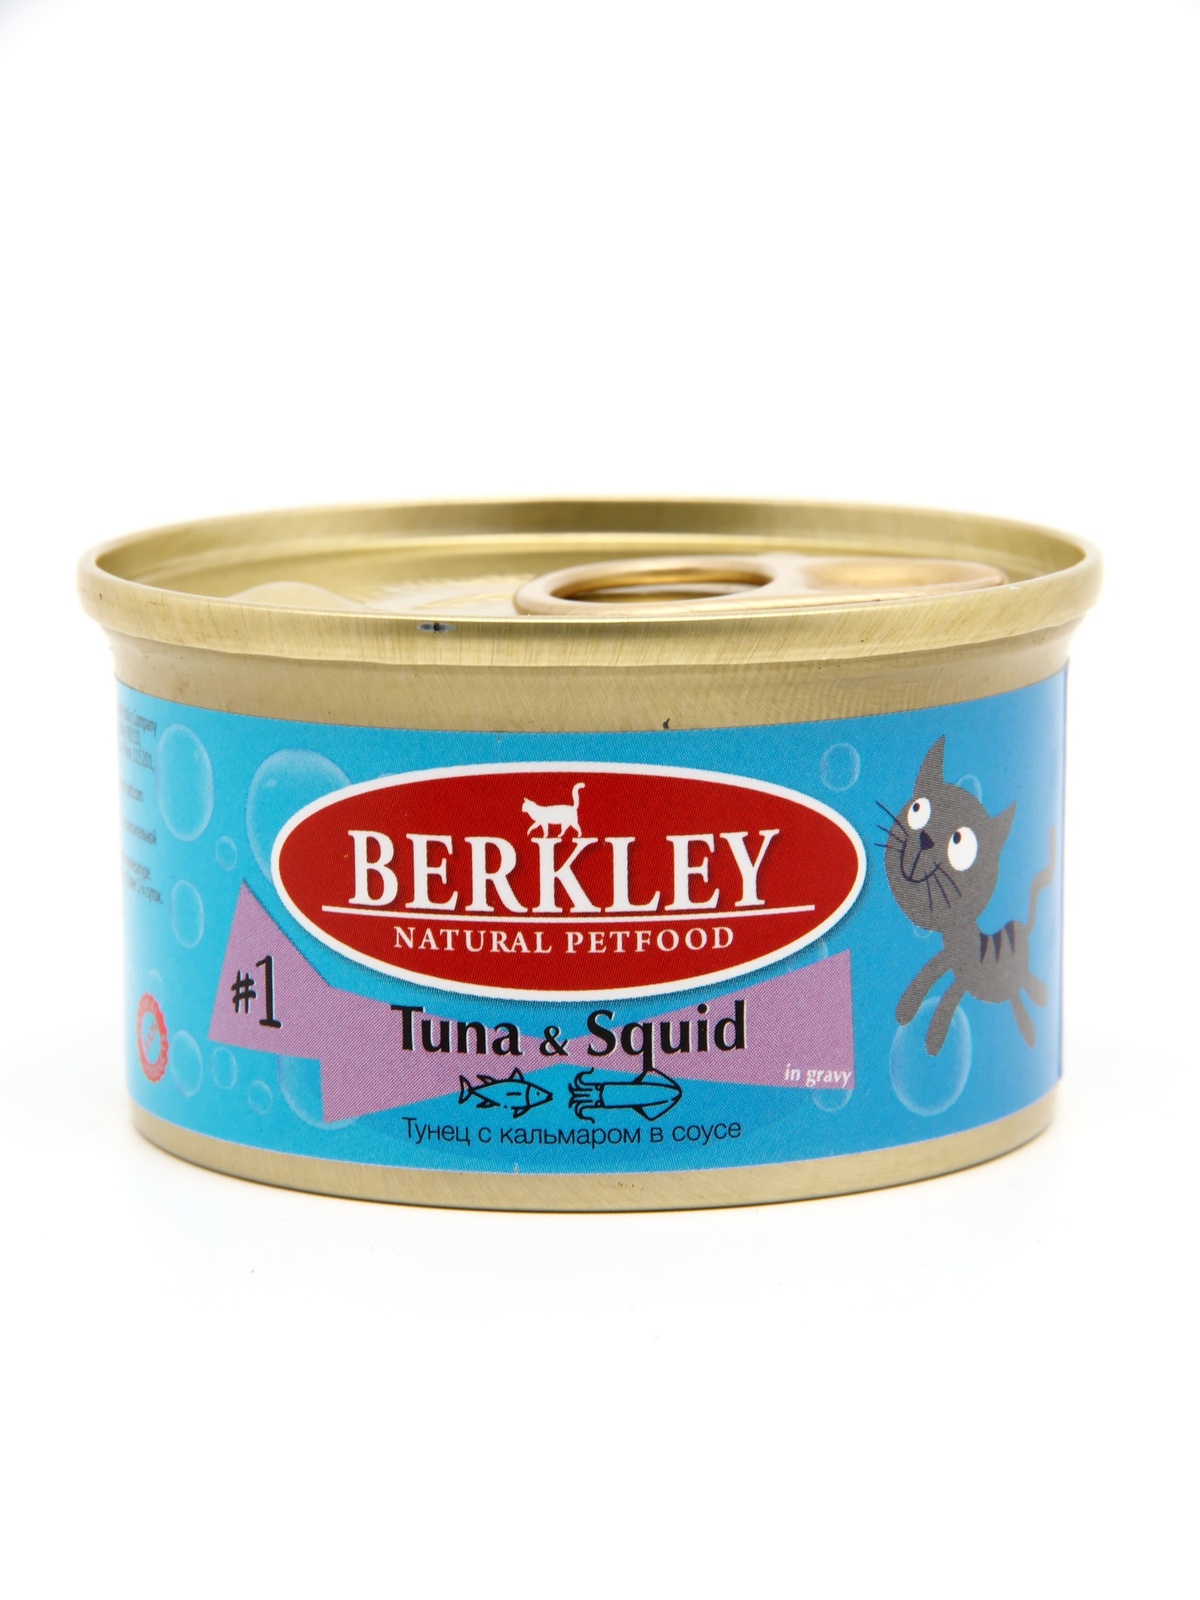 Berkley консервы для кошек тунец с кальмаром (85 г) Berkley консервы для кошек тунец с кальмаром (85 г) - фото 1